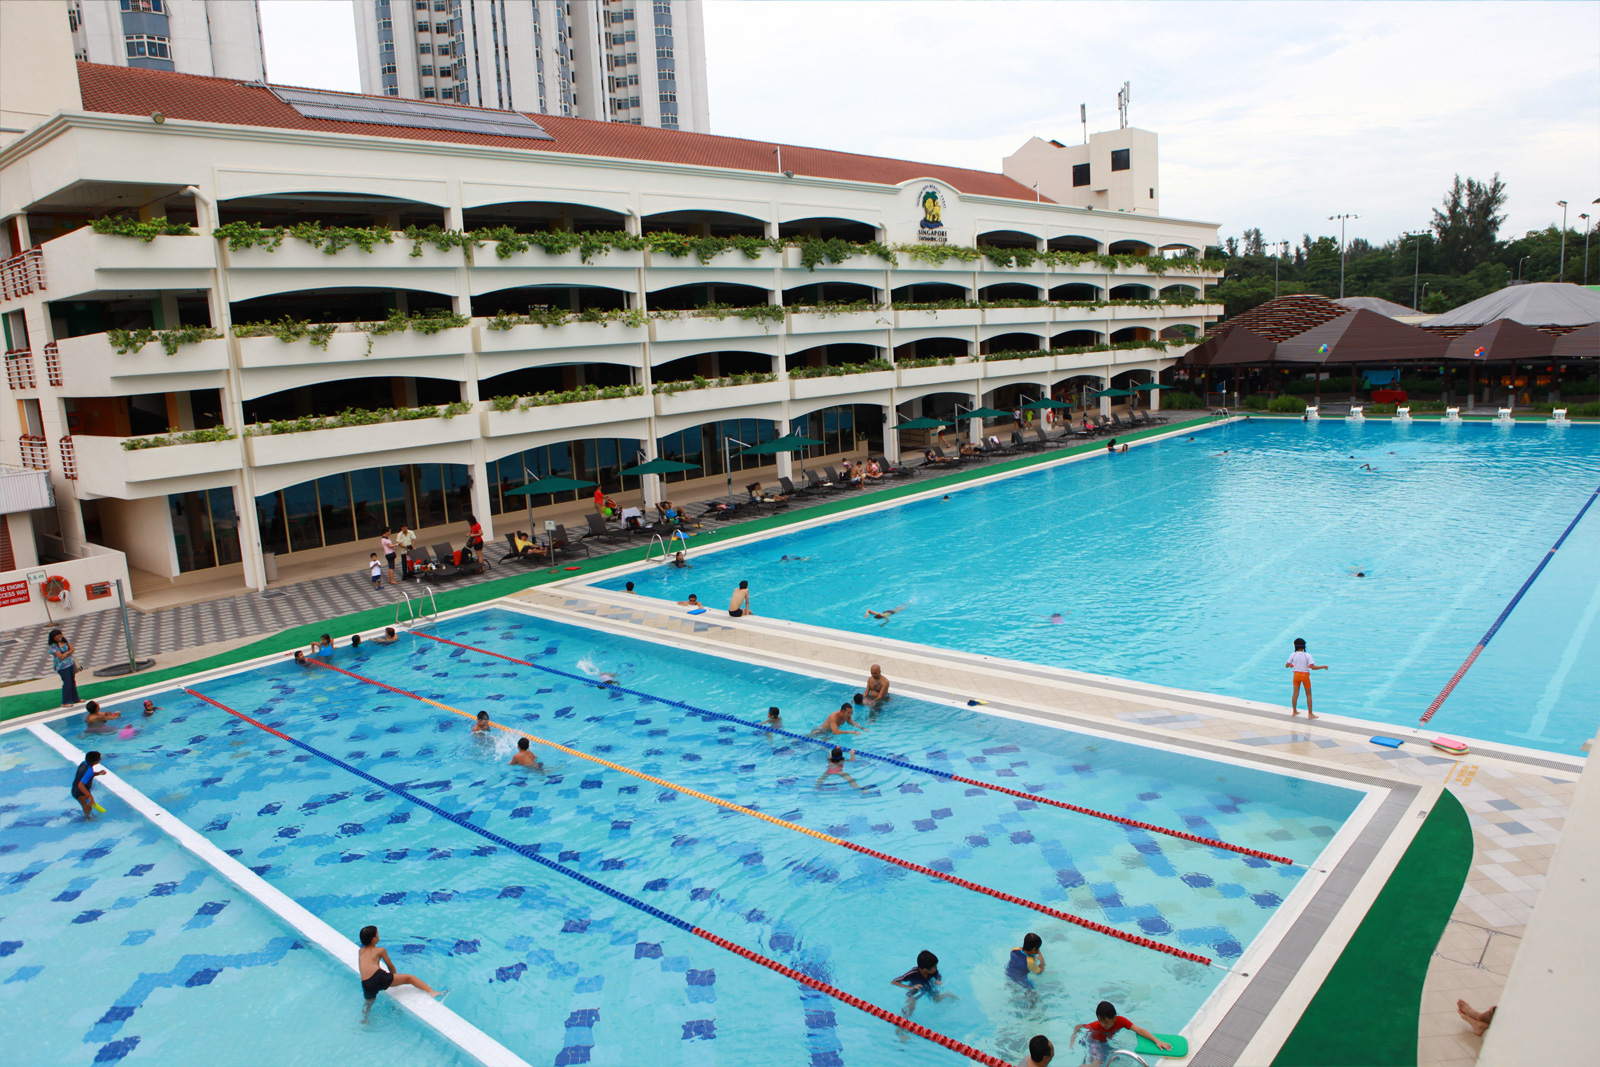 Swim with kids at SINGAPORE SWIMMING CLUB, Singapore